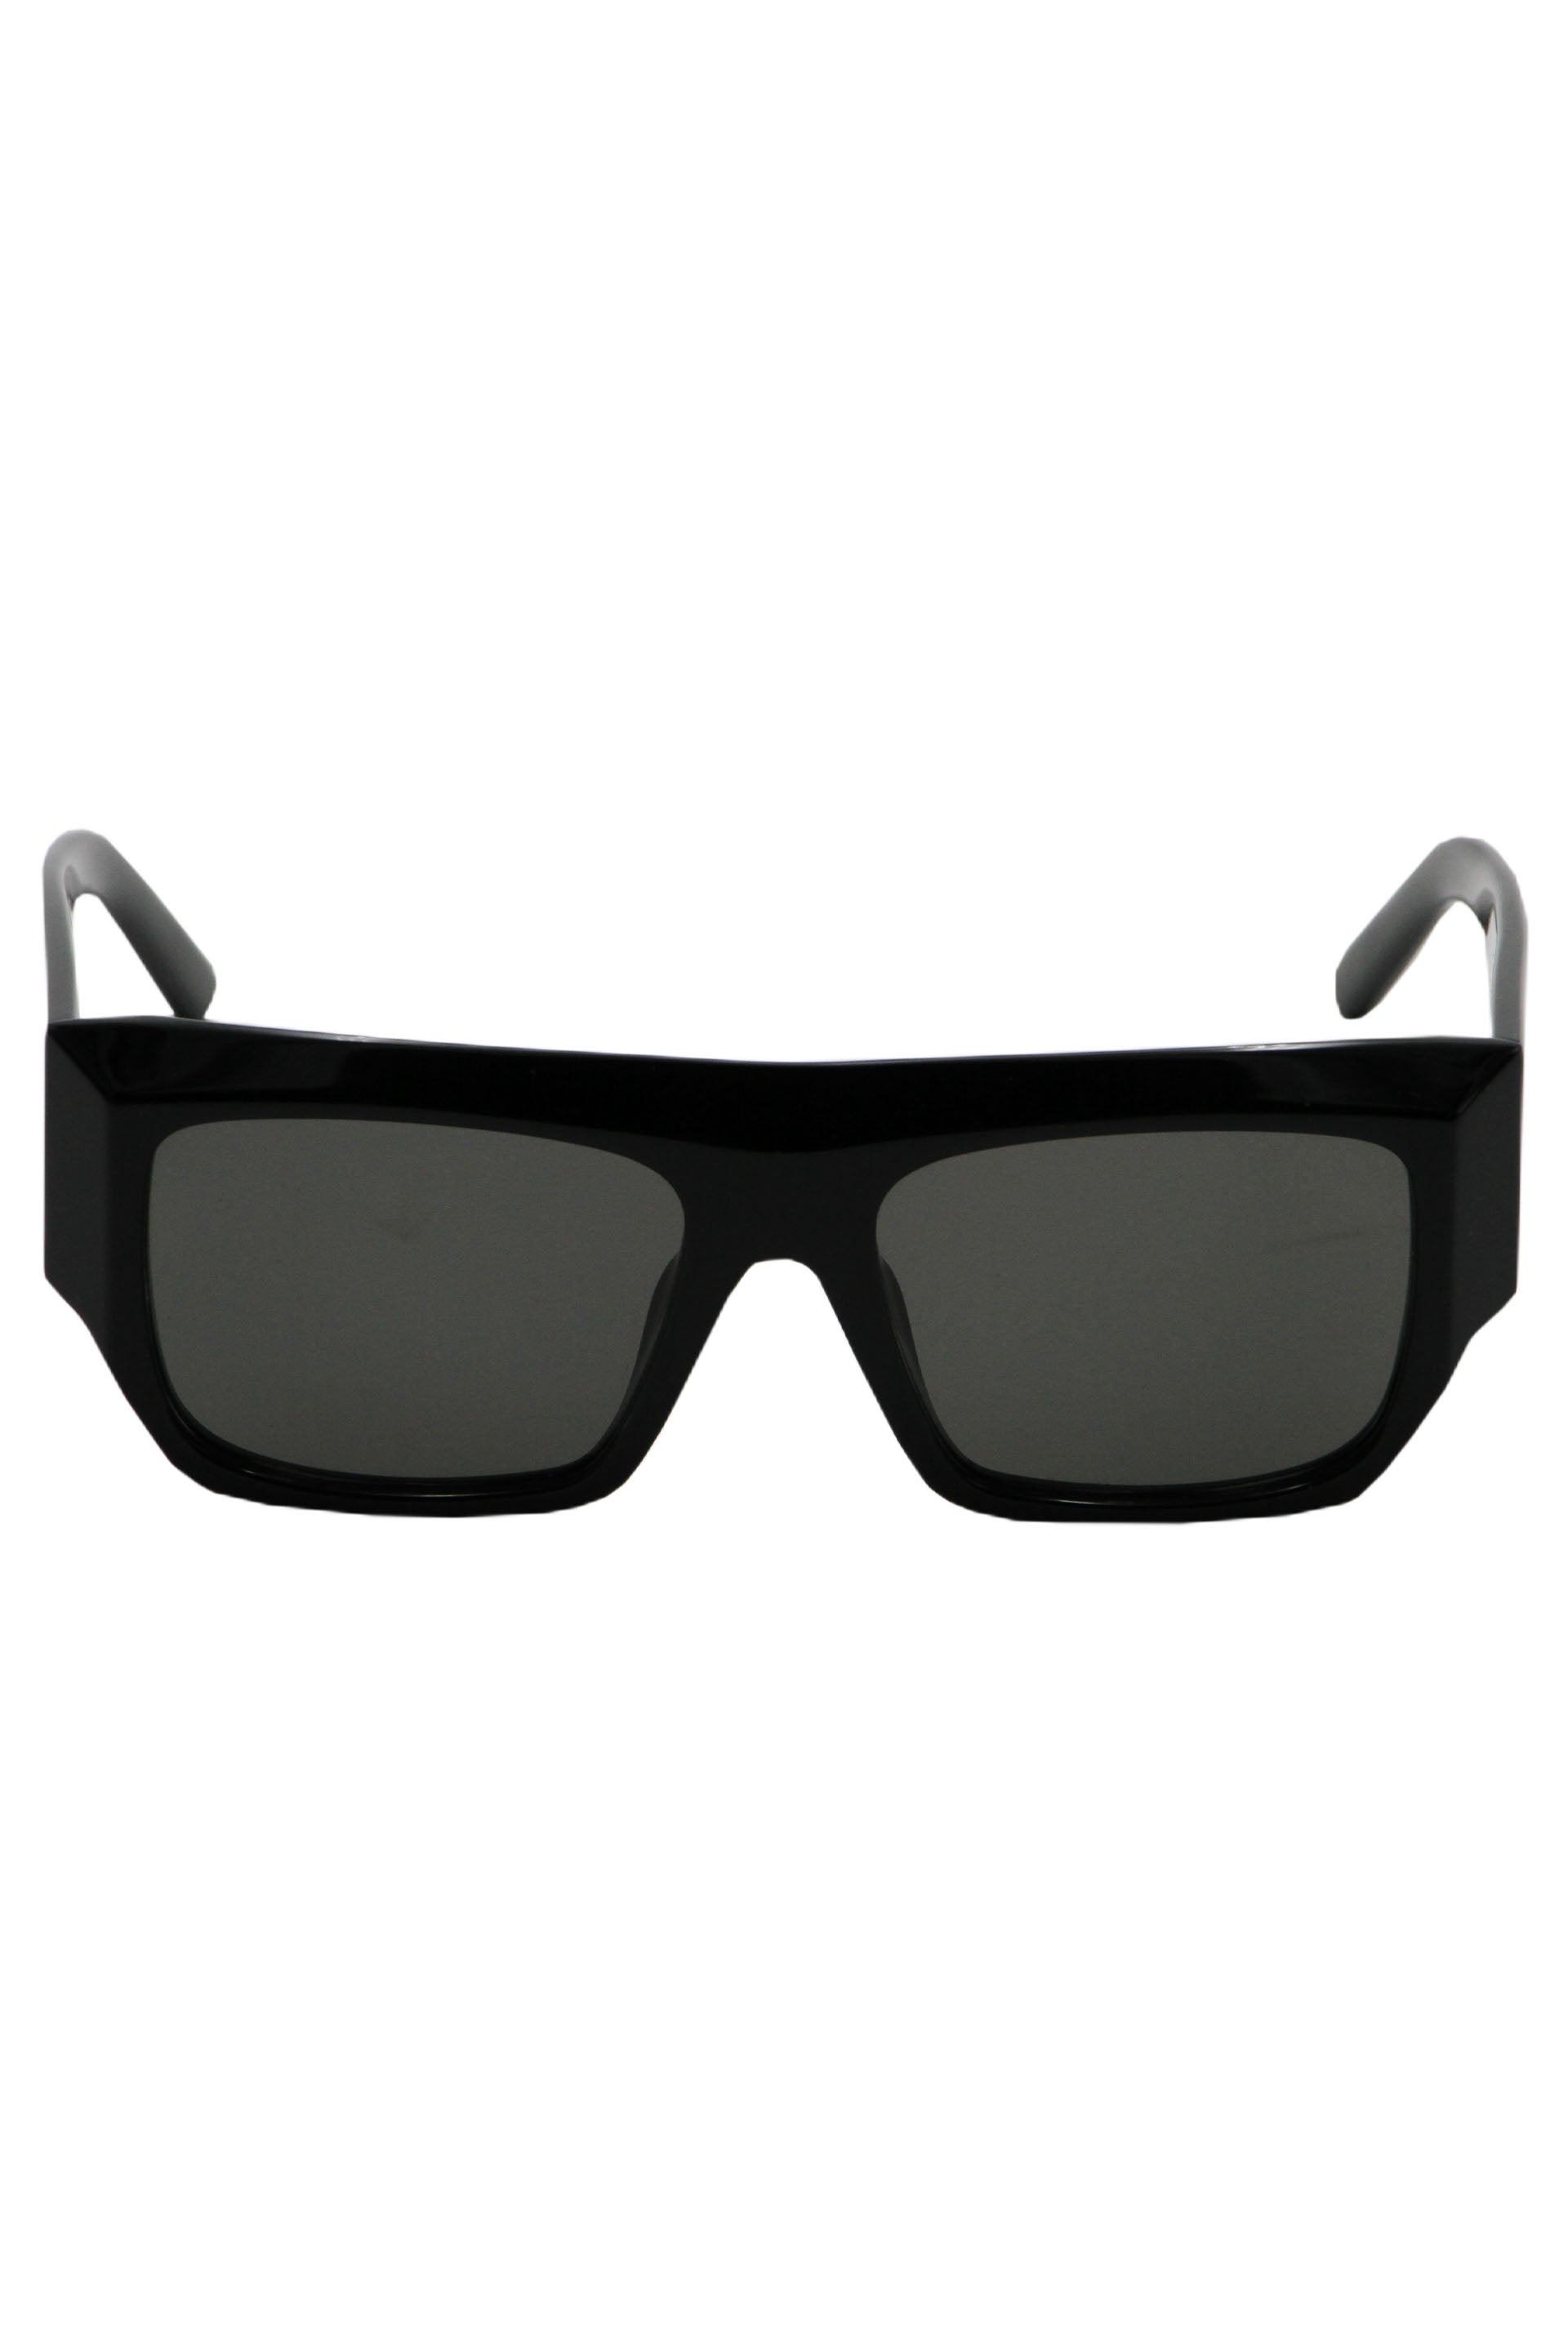 Palm-Angels-OUTLET-SALE-Blanca-rectangular-frame-sunglasses-Sonnenbrille-TU-ARCHIVE-COLLECTION-2.jpg